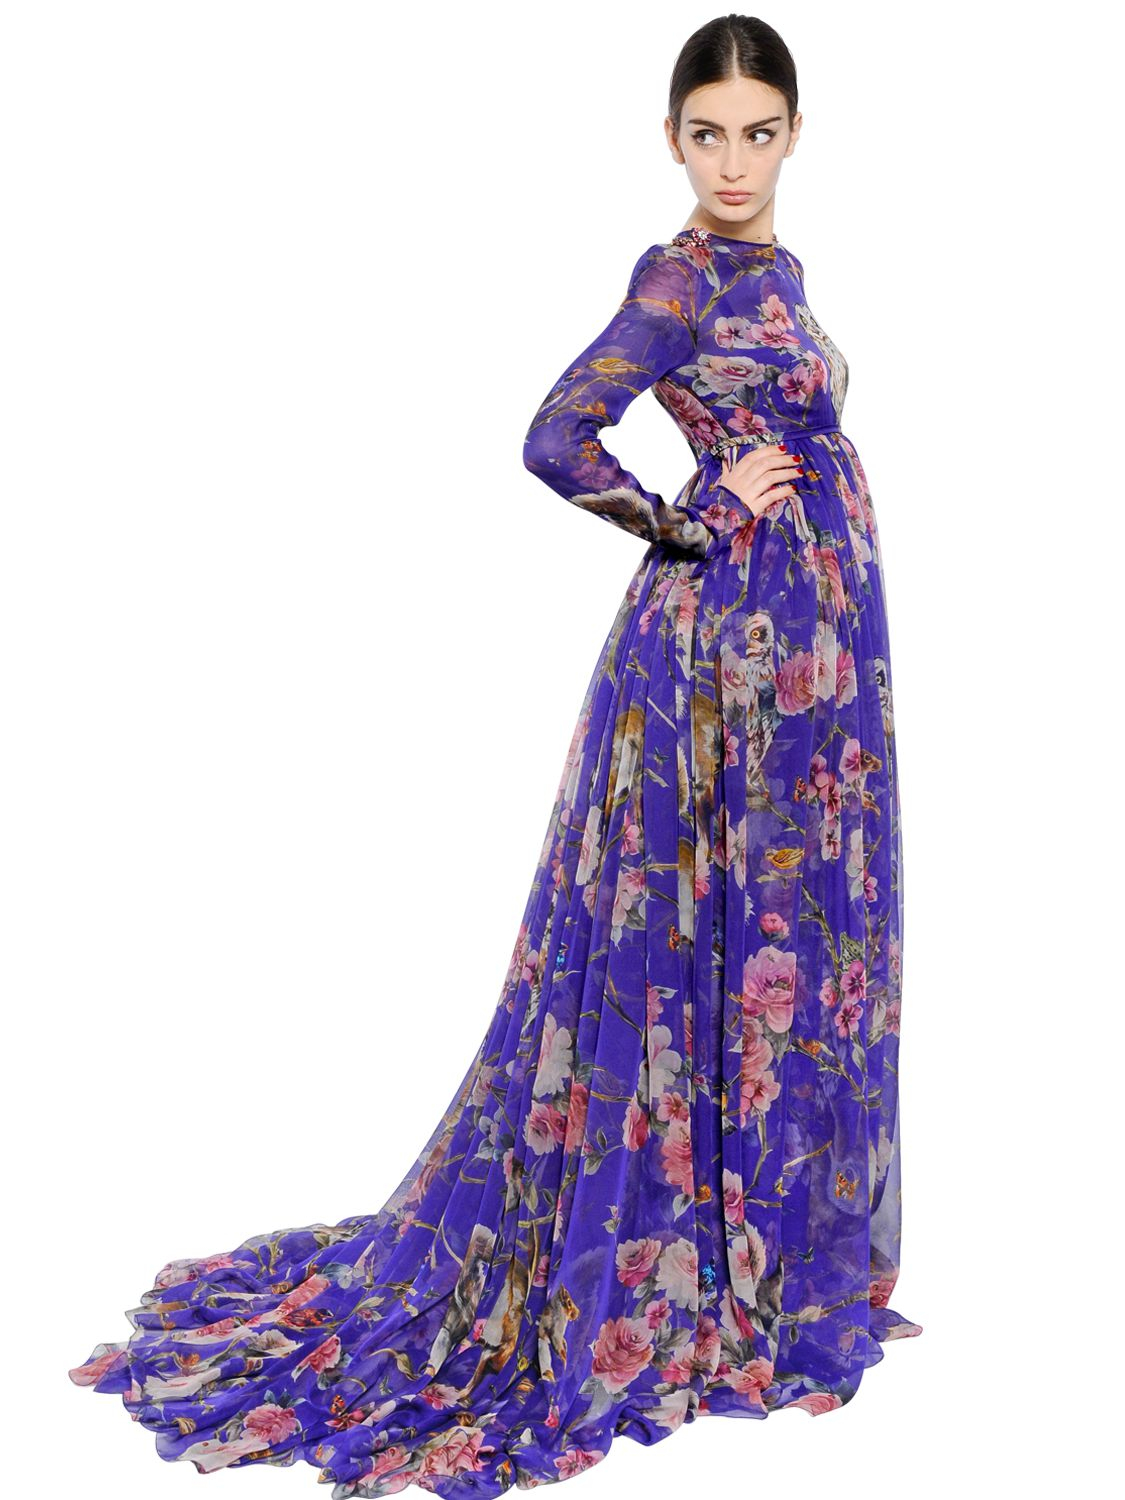 Dolce & Gabbana Floral Printed Silk Chiffon Dress in Purple - Lyst